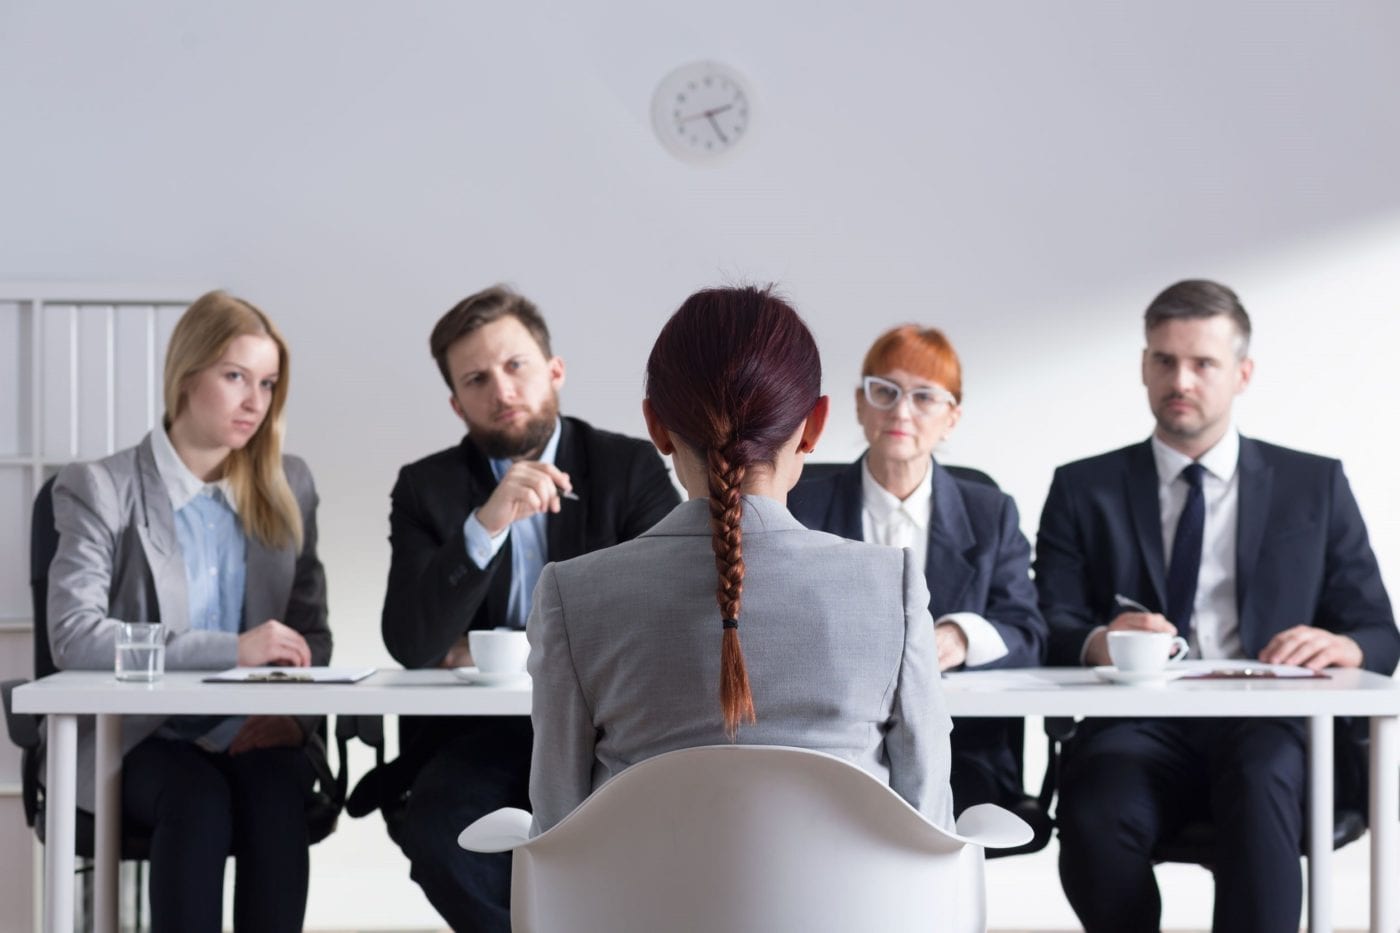 Helen Tupper: Three questions you shouldn’t ask in job interviews